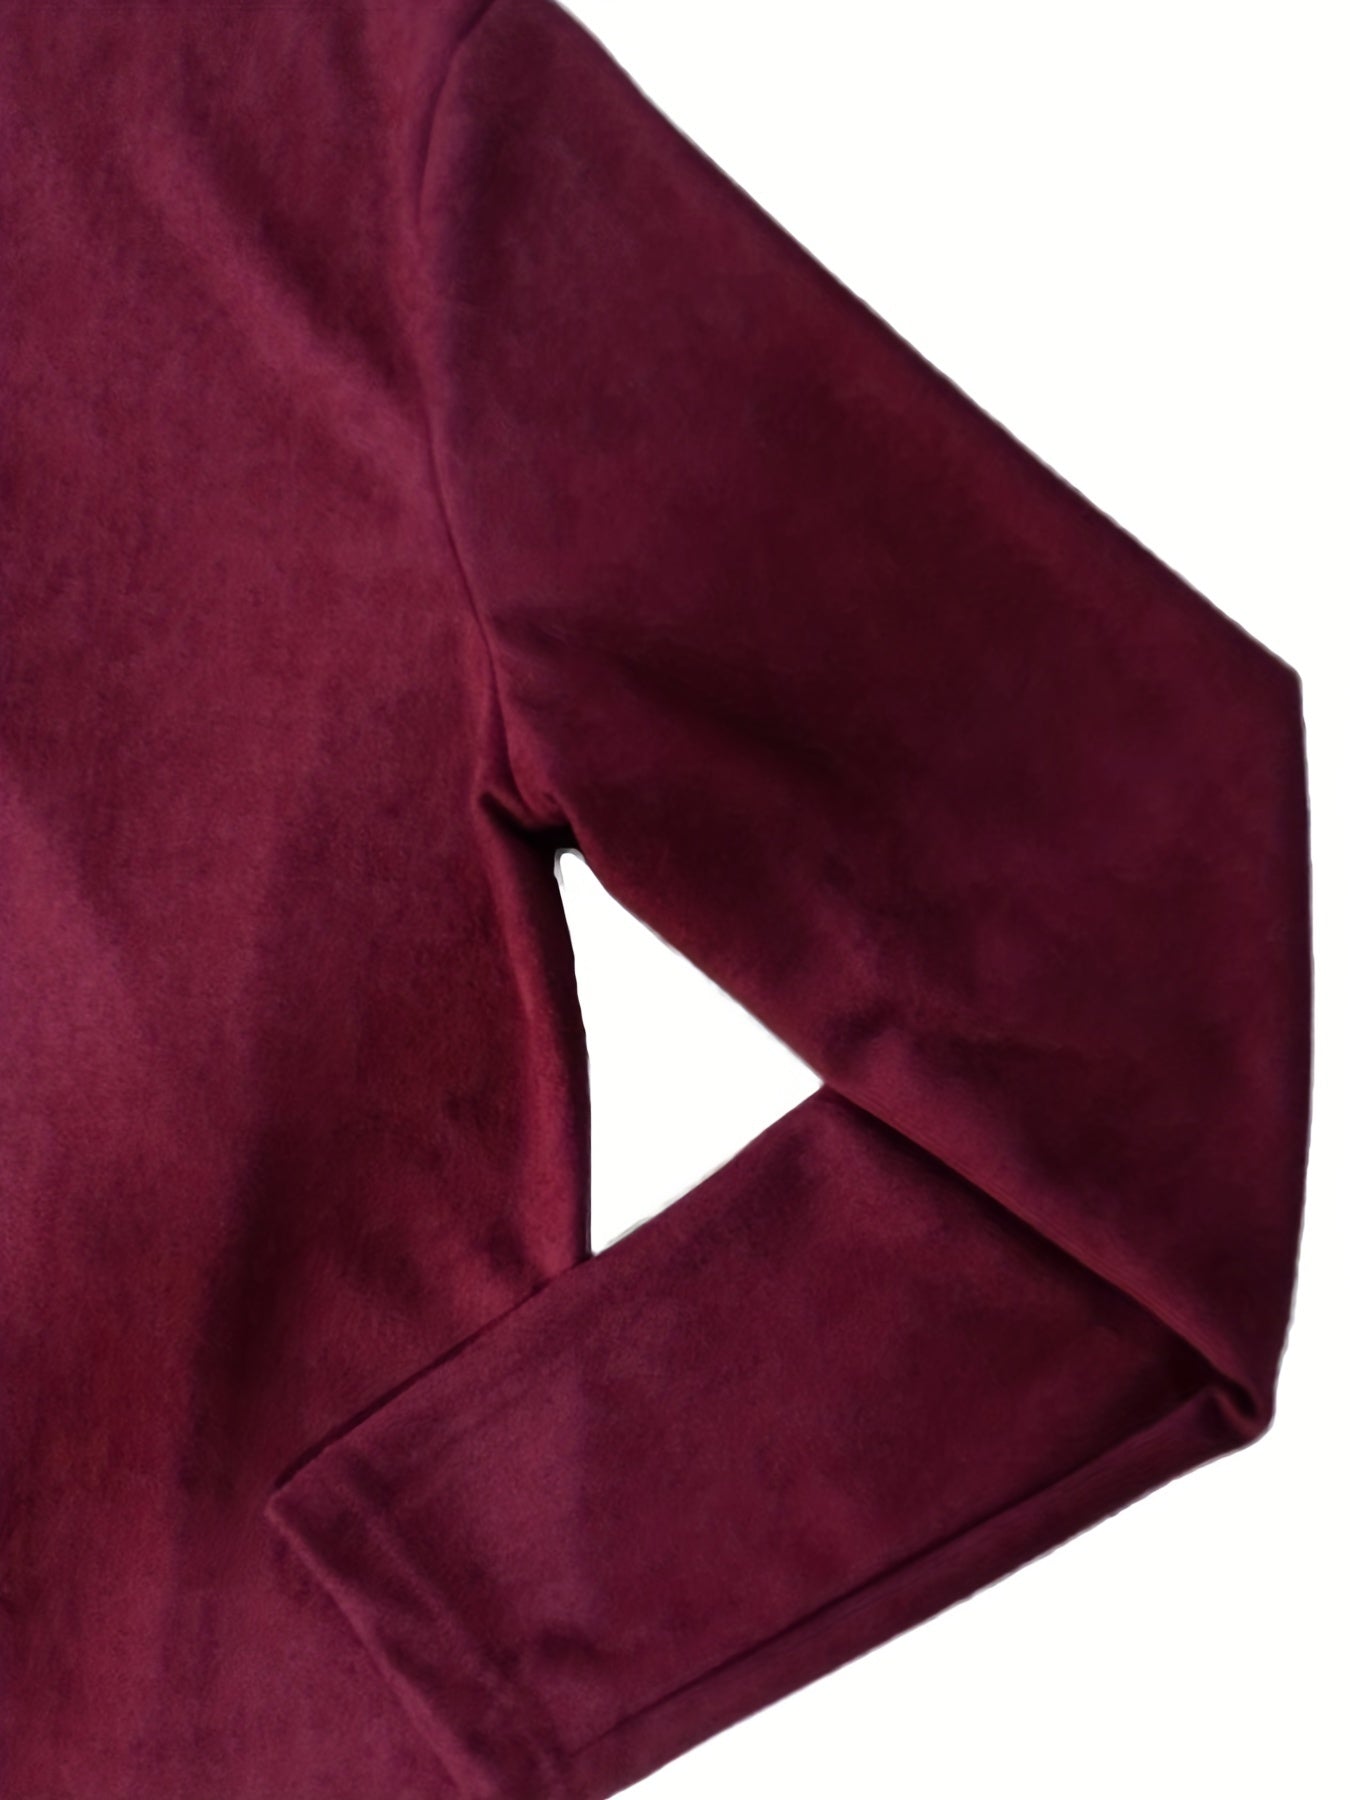 Antmvs Solid Open Front Coat, Elegant Long Sleeve Work Office Outerwear, Women's Clothing